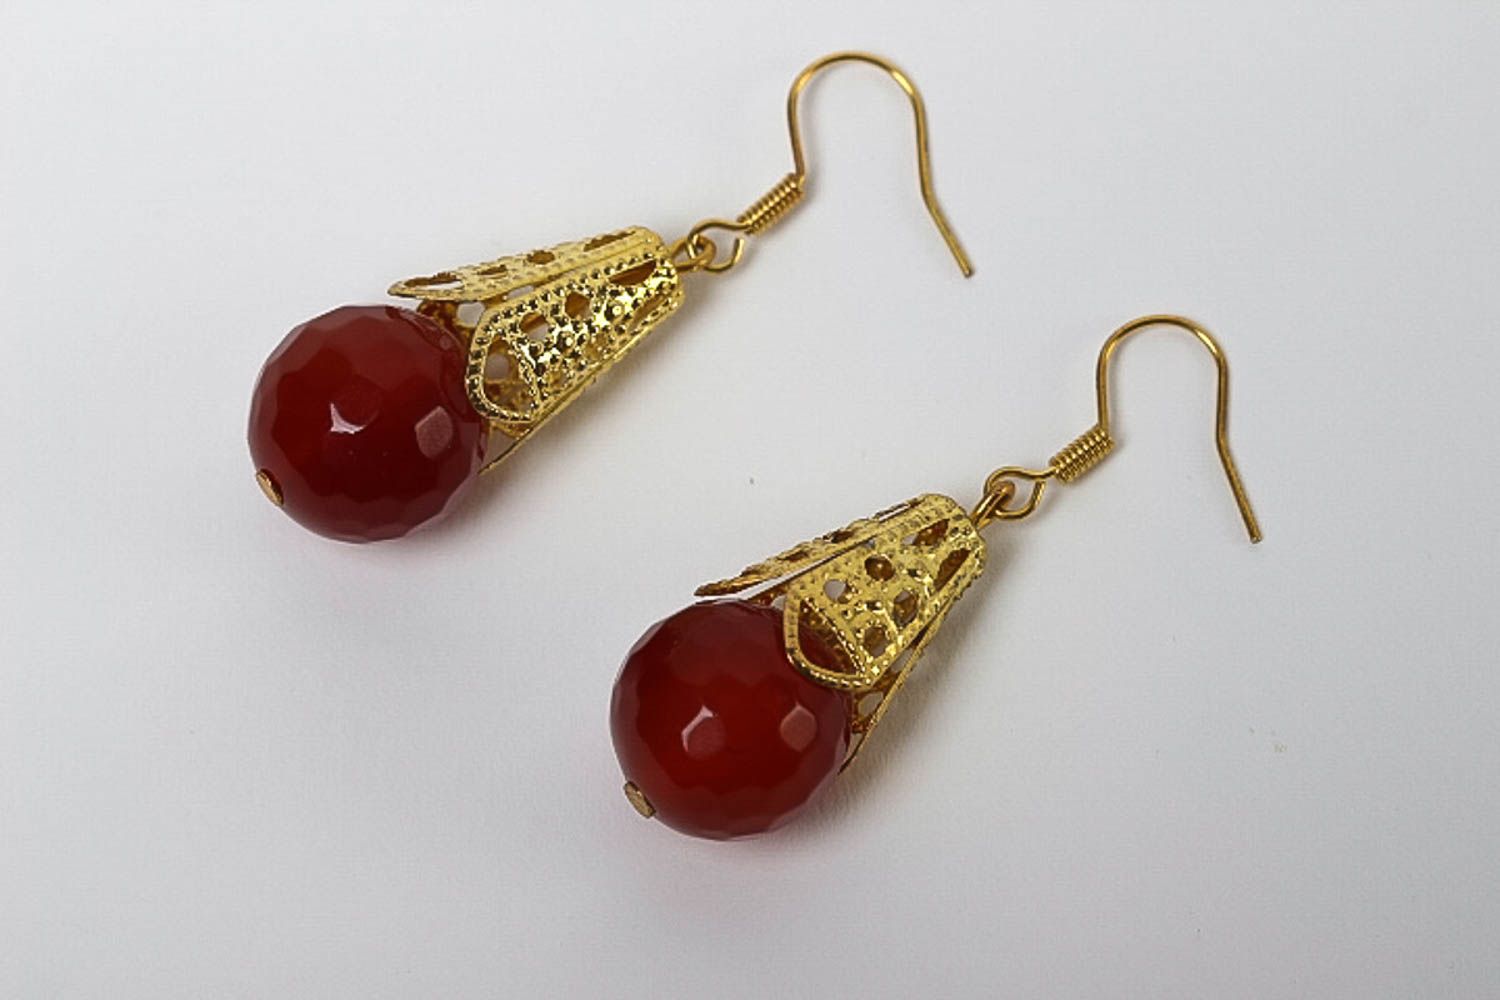 Handmade earrings with cornelian beads earrings with charms designer jewelry photo 2